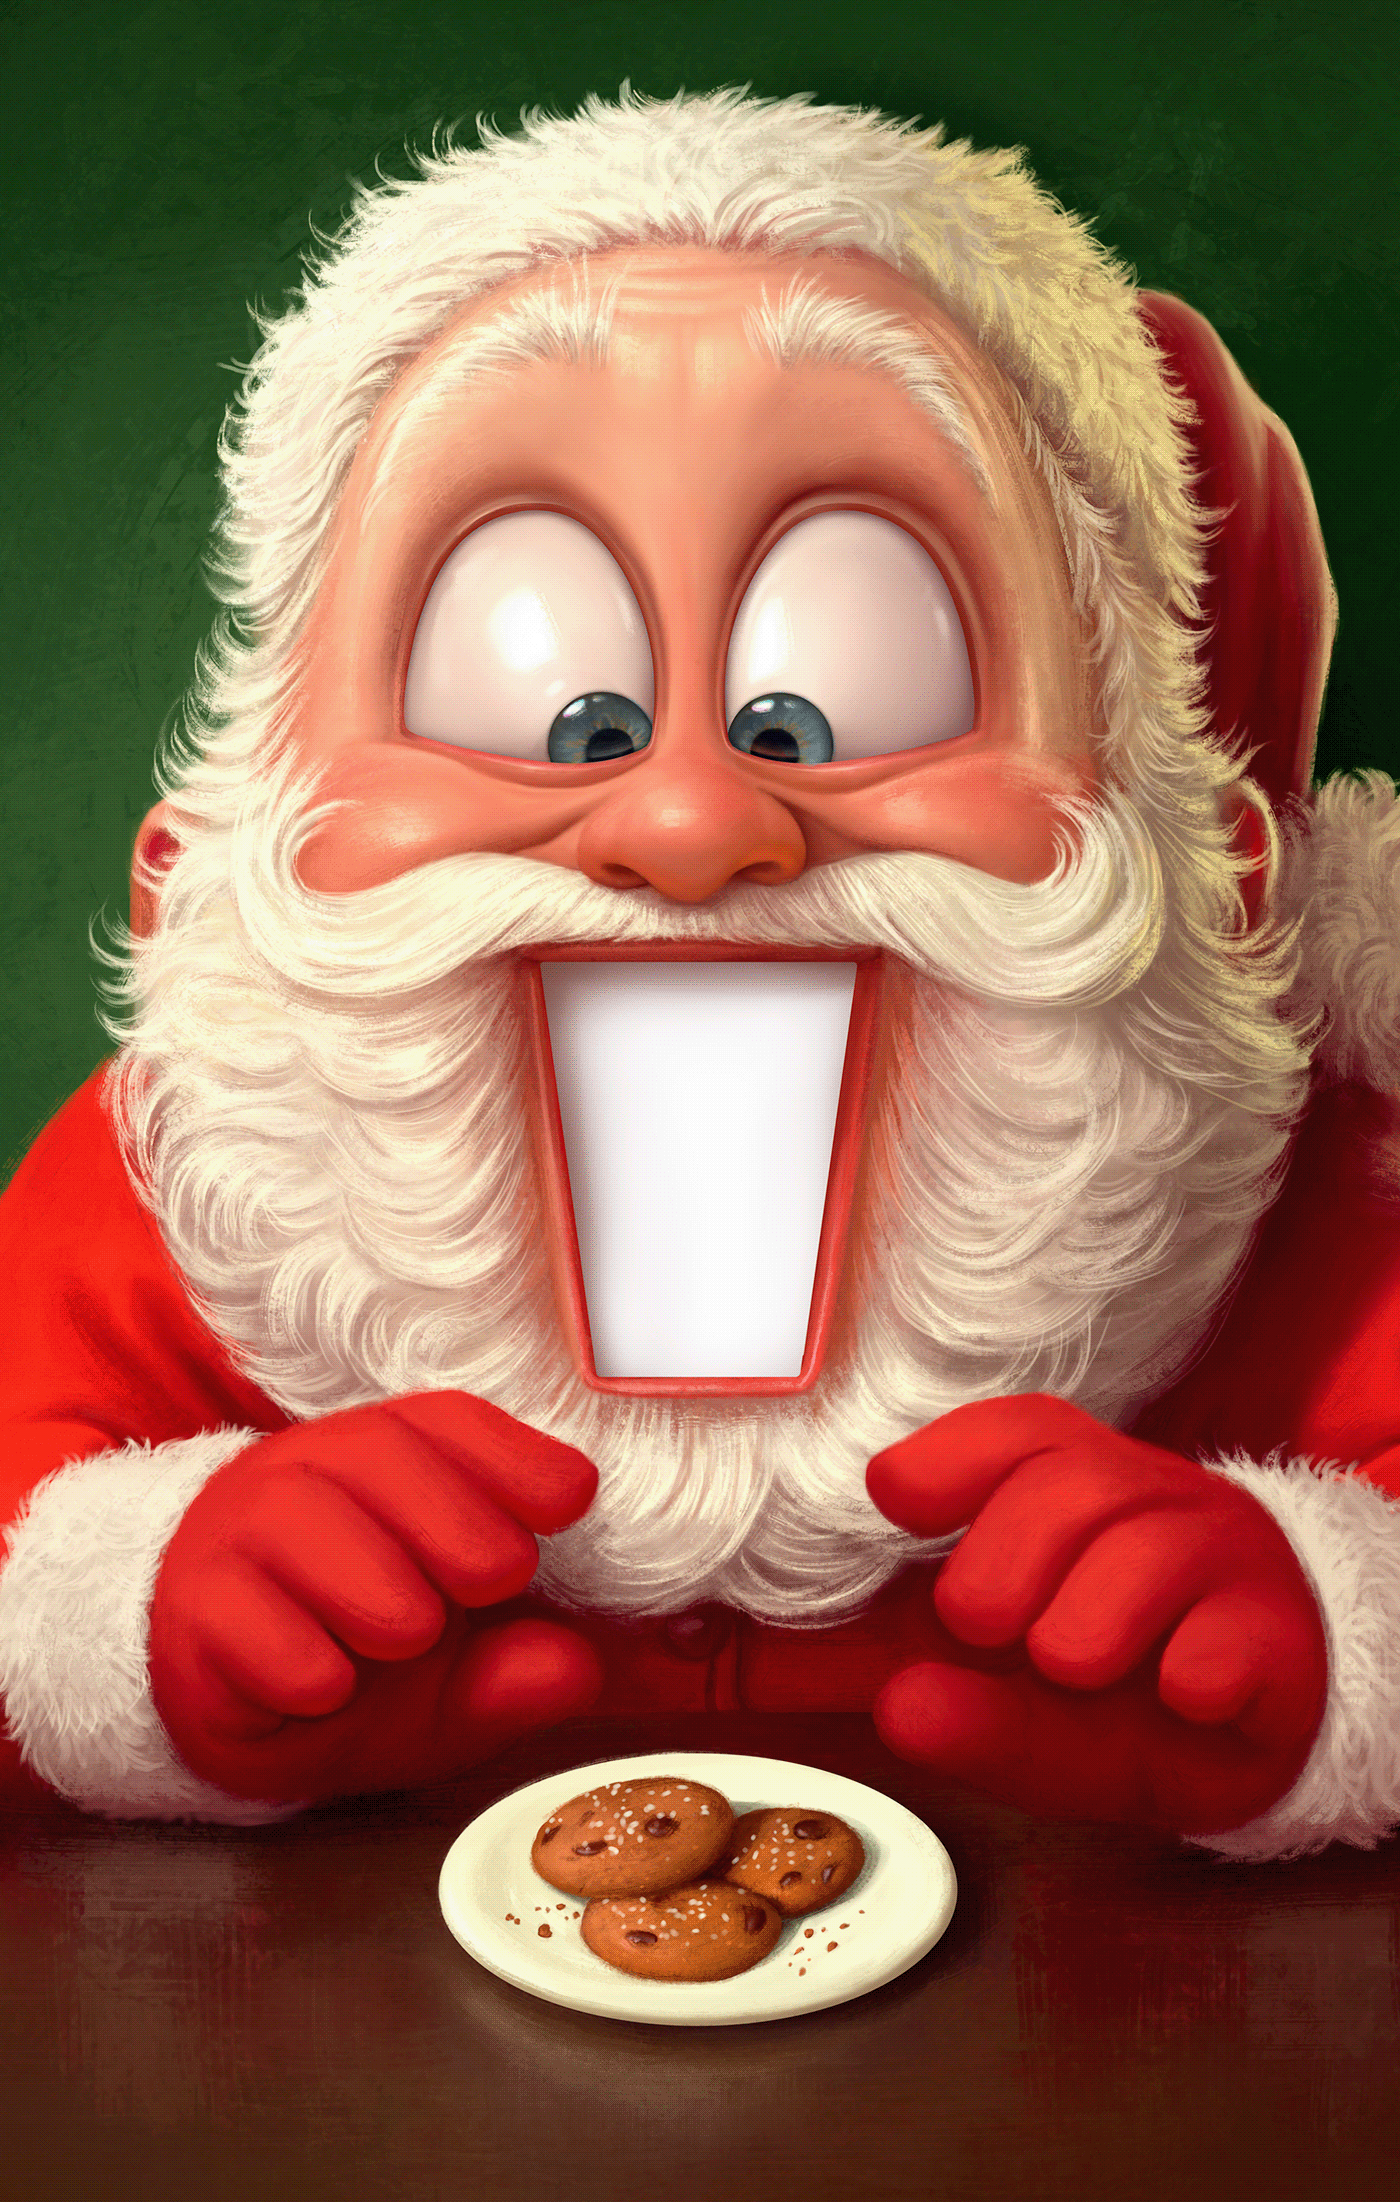 Advertising  art direction  Christmas Holiday lg2 milk print publicité santa xmas